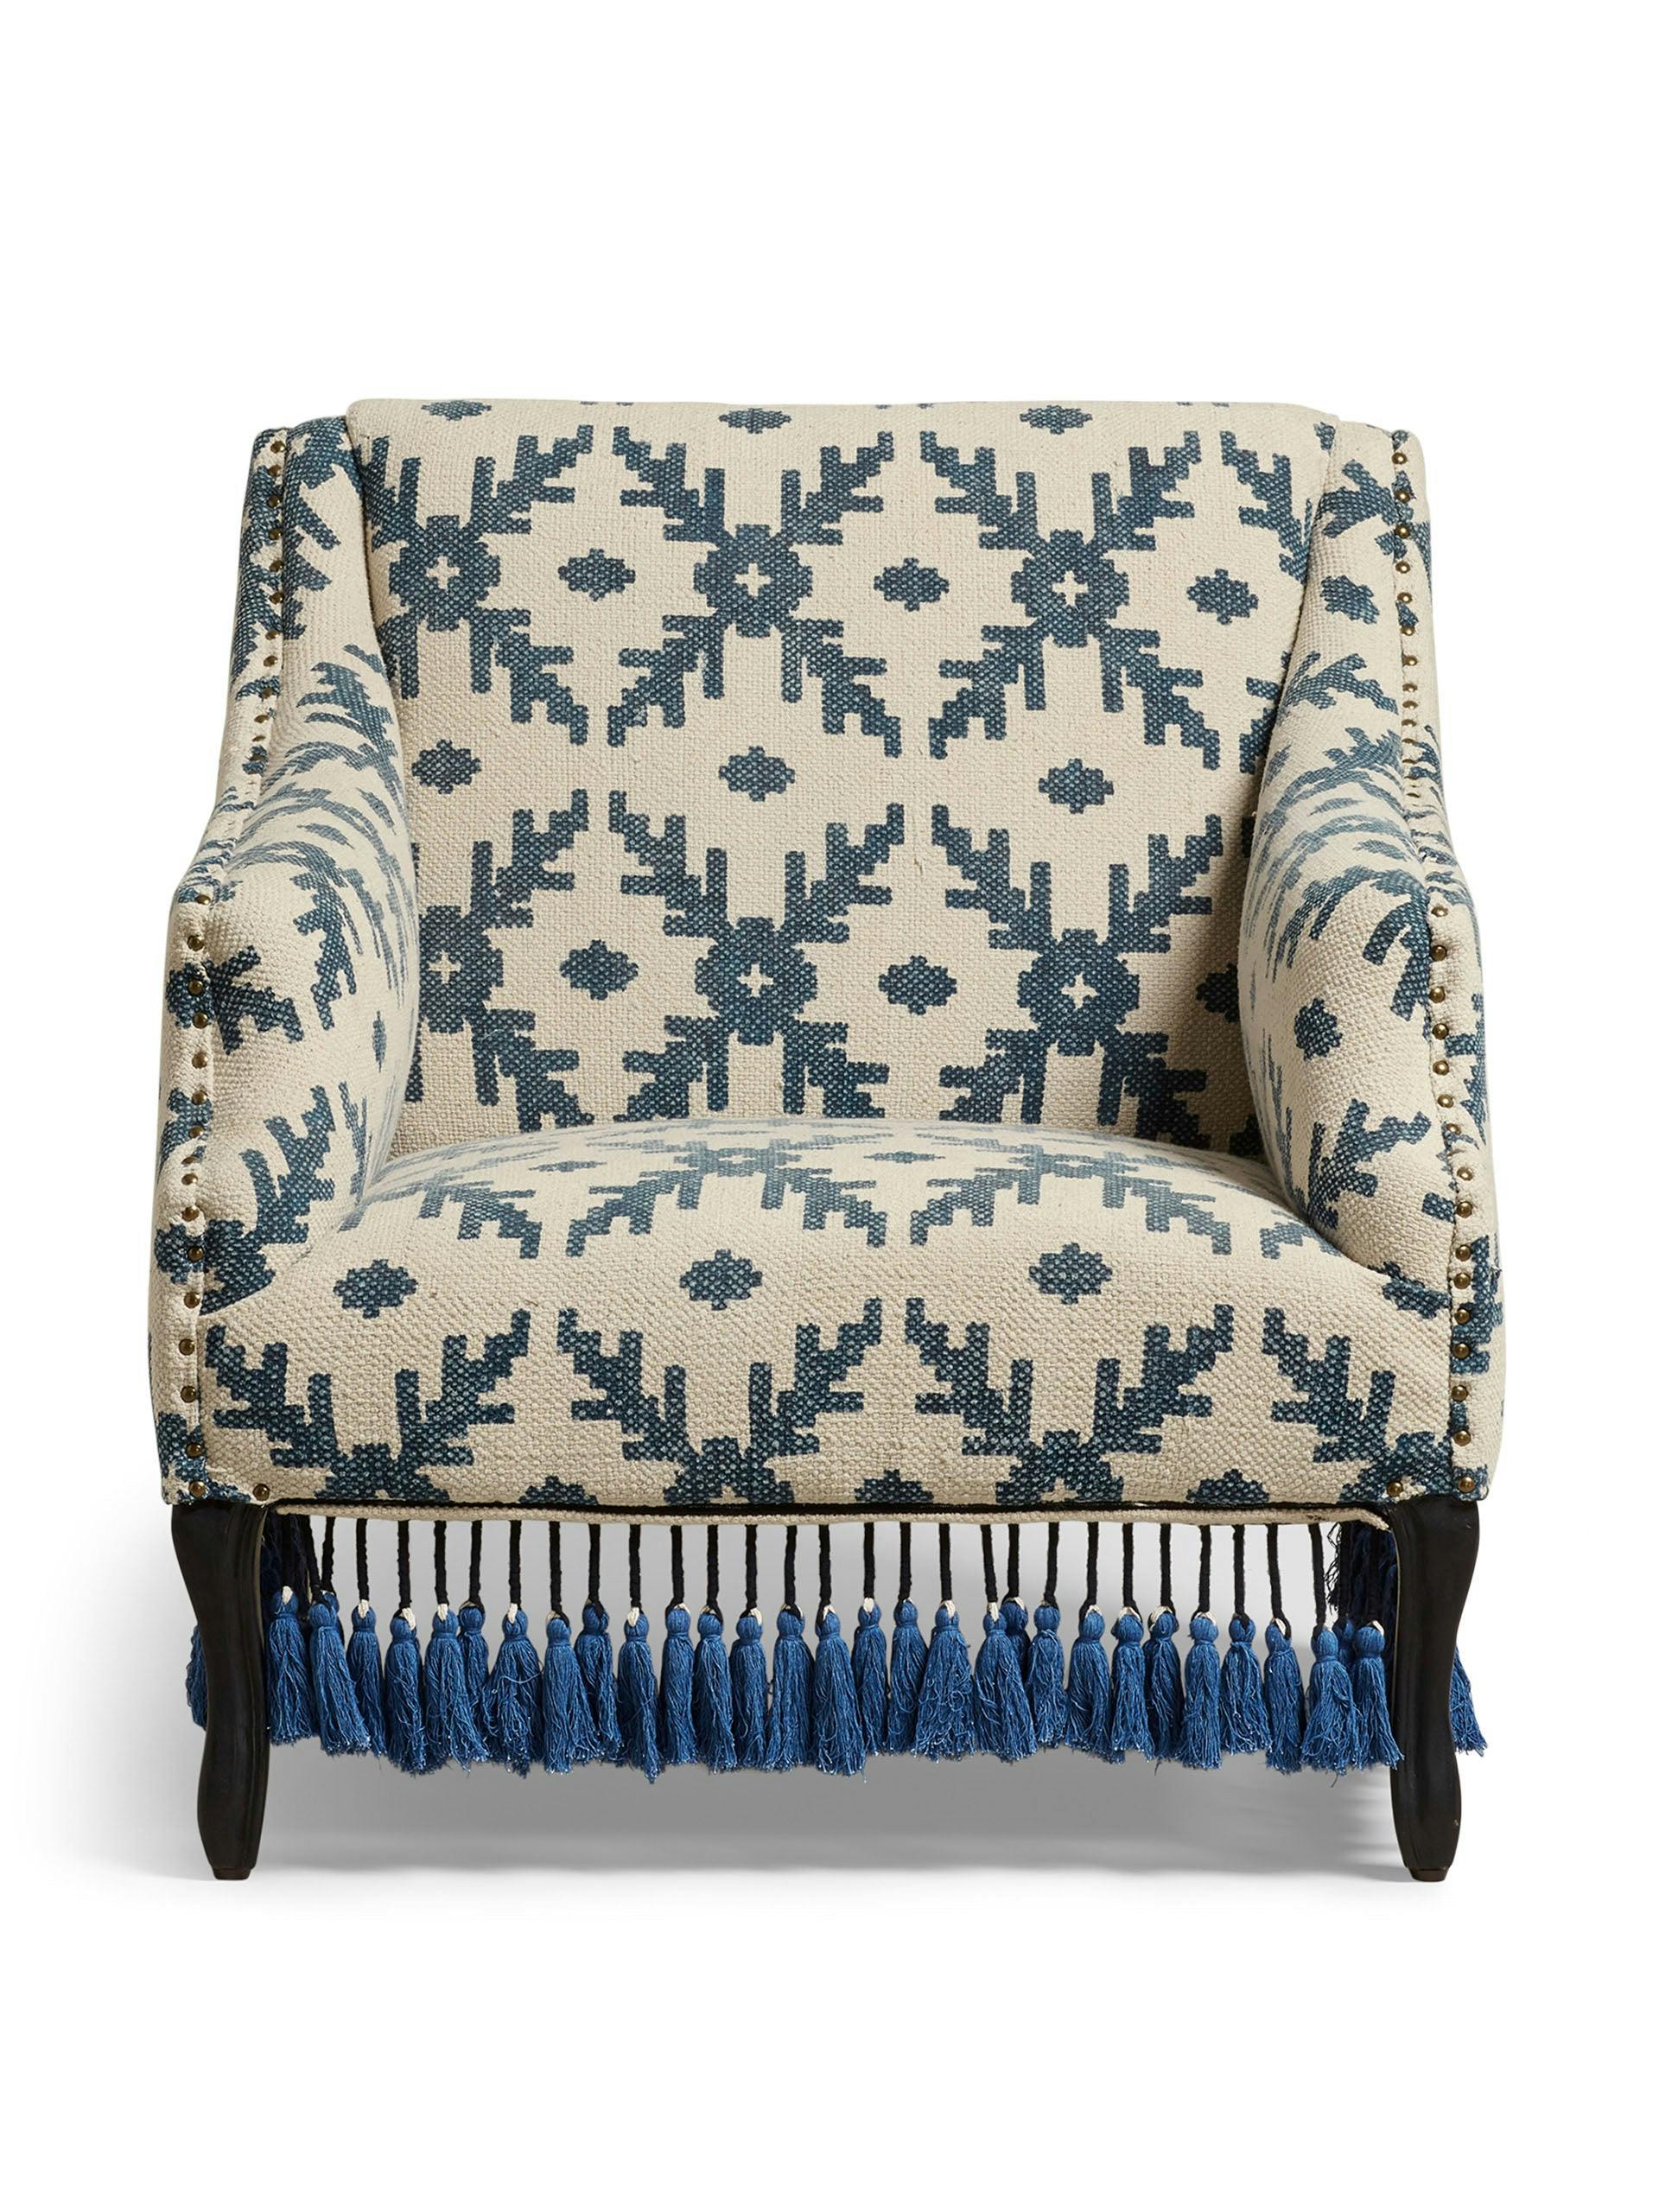 Tarma tasselled armchair in Lazaret blue